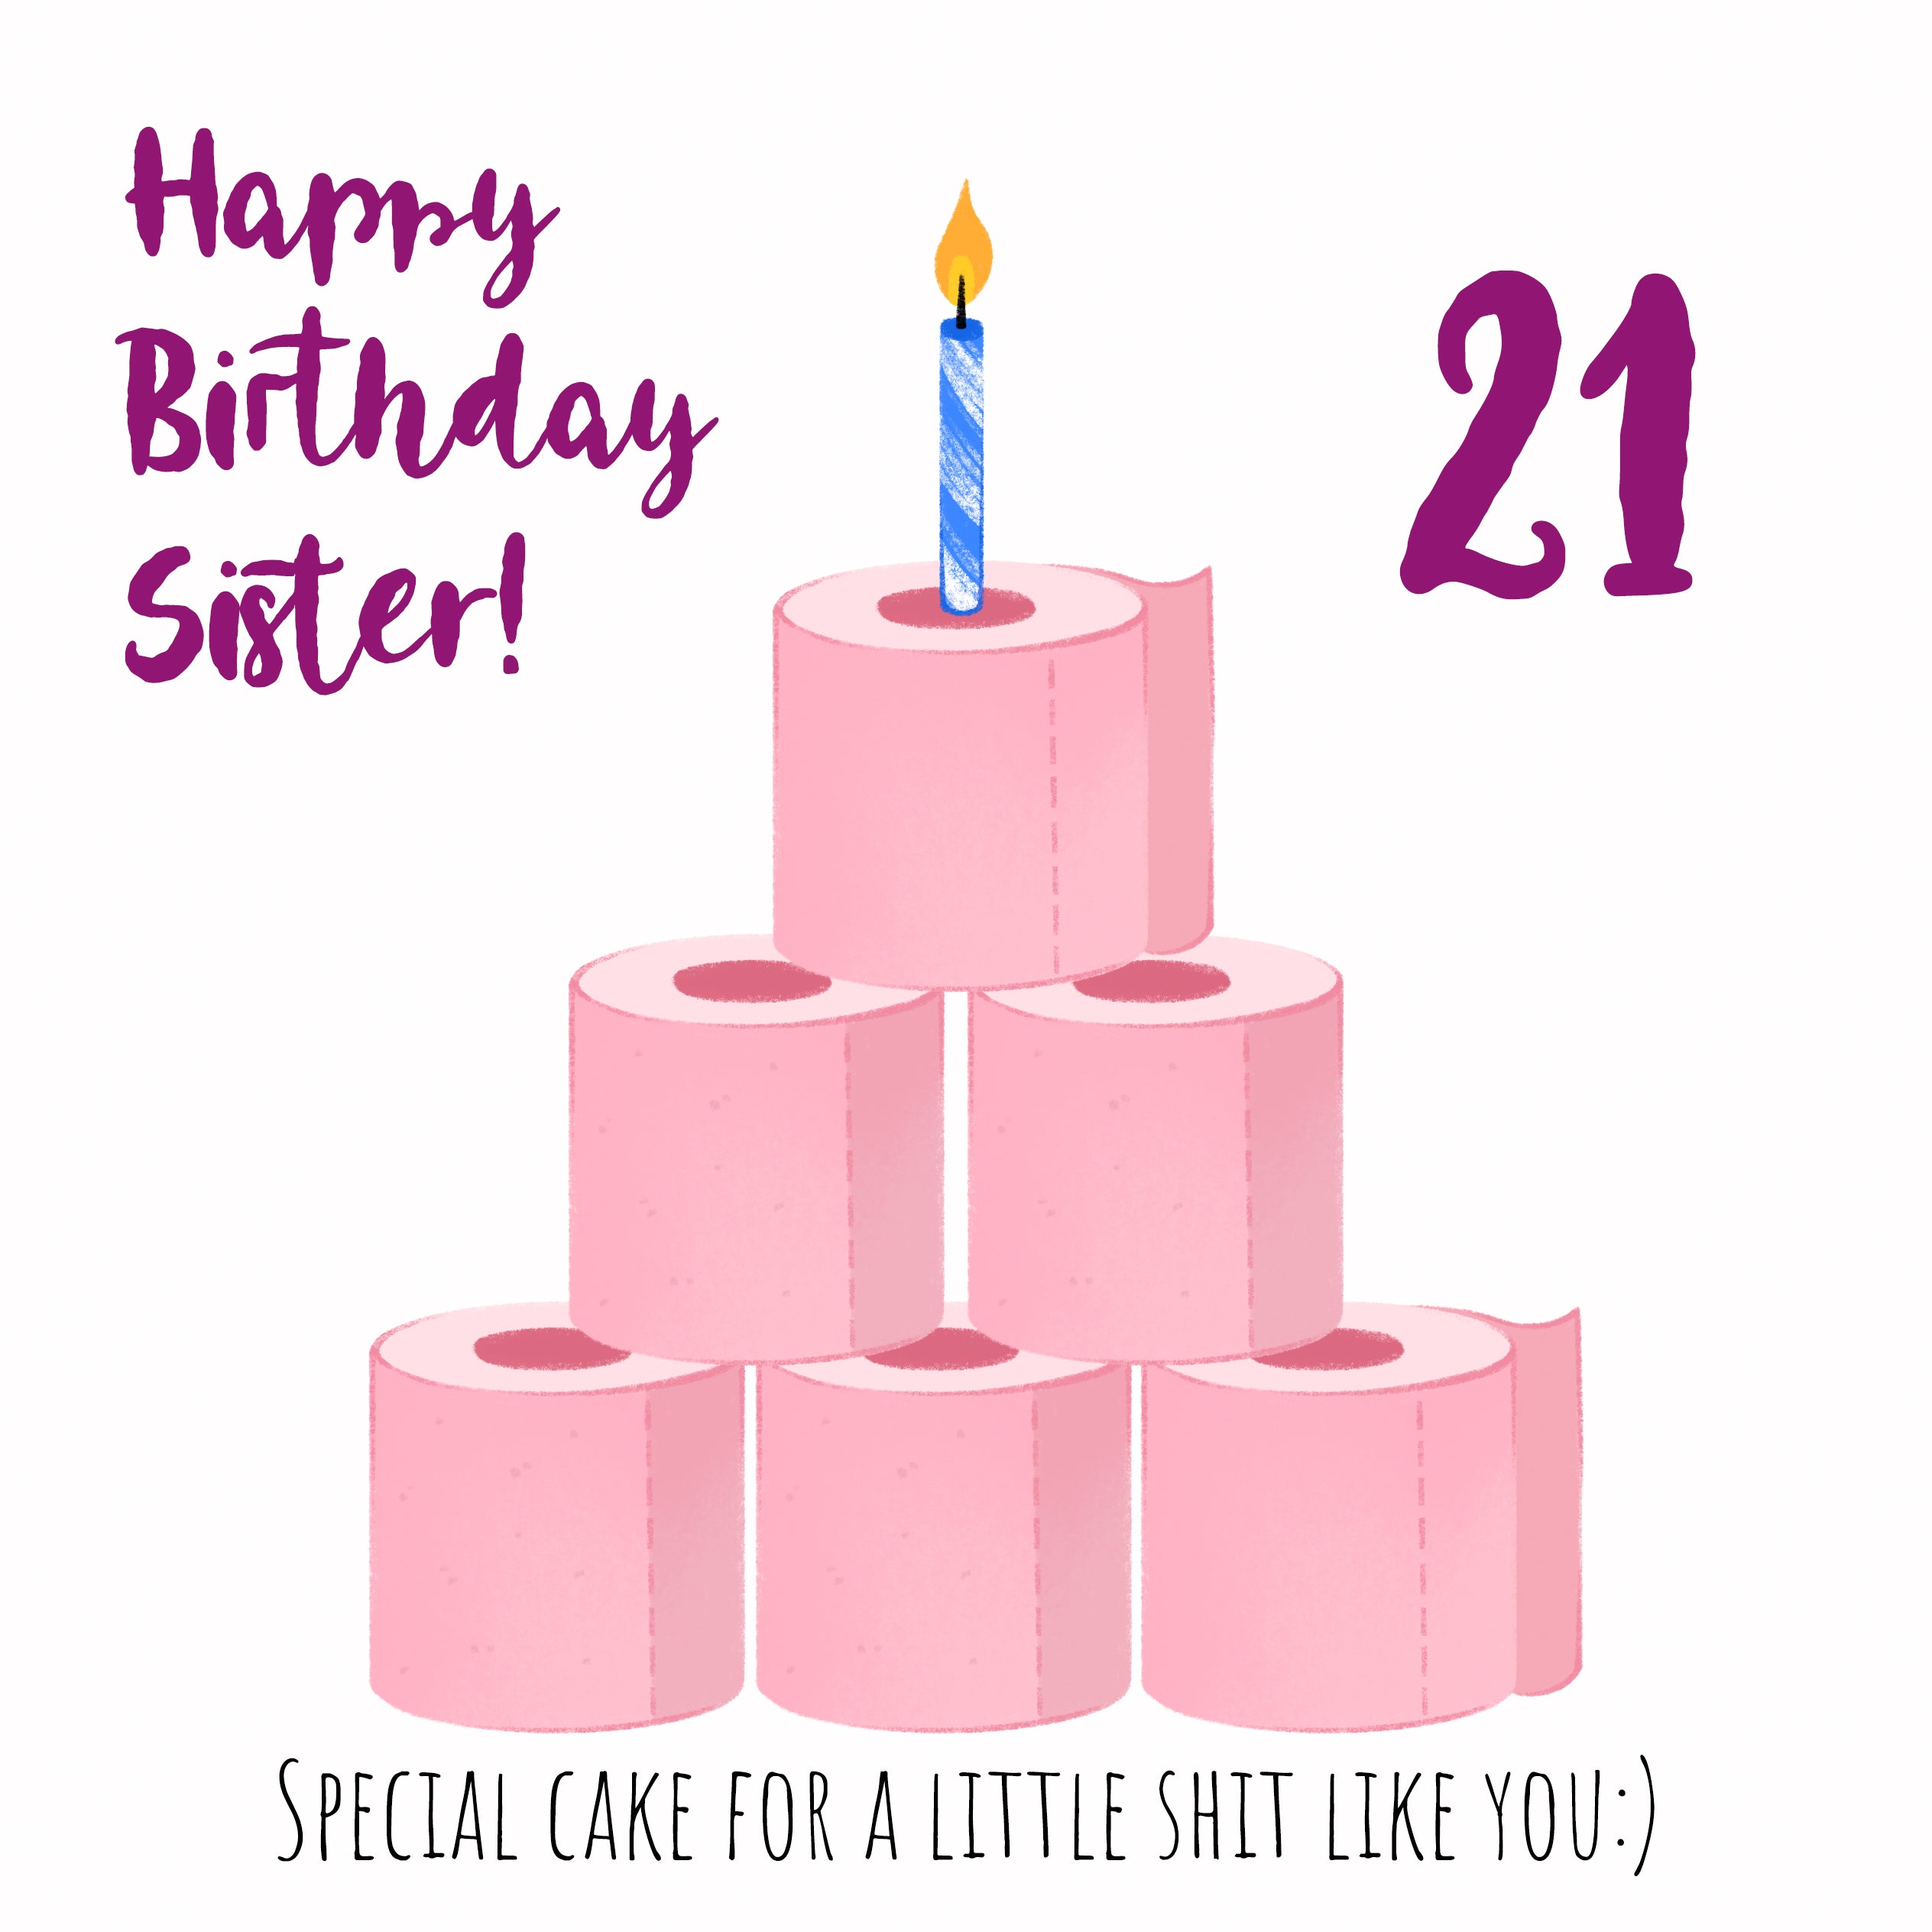 happy 21st birthday quotes sister